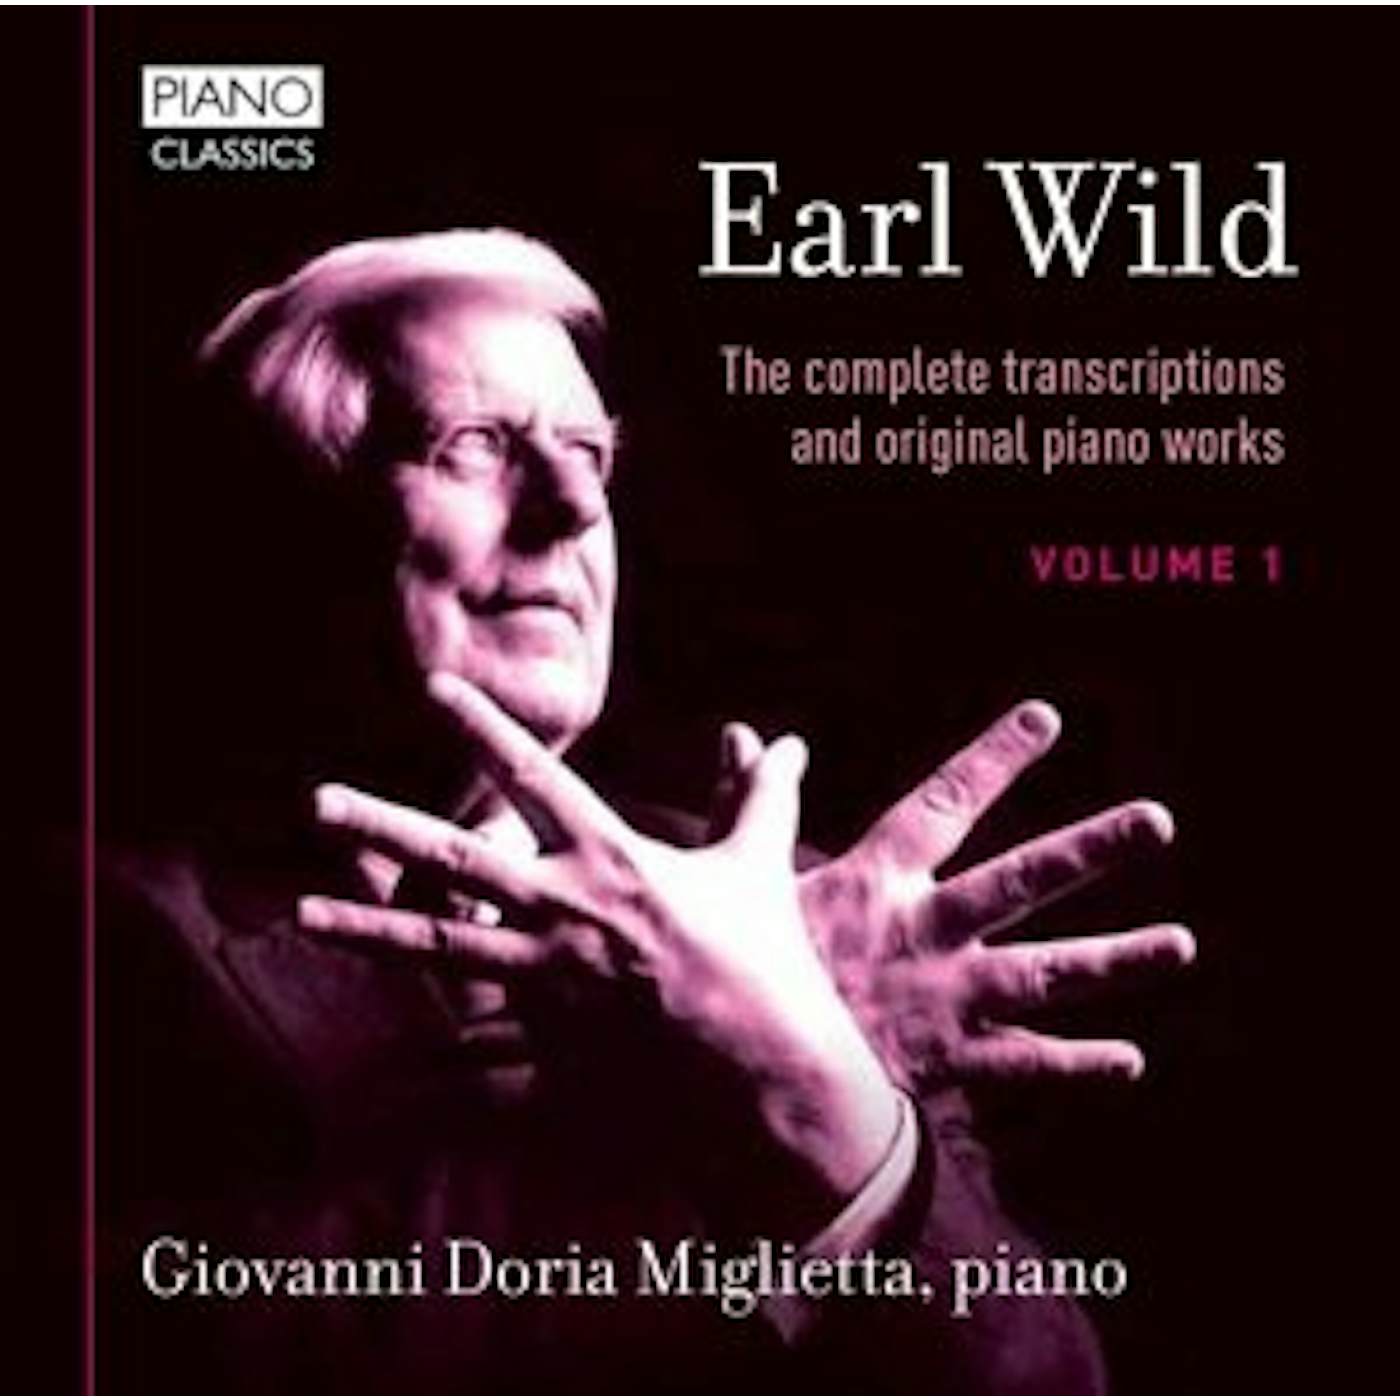 The Wild COMP TRANSCRIPTIONS & ORIGINAL PIANO WORKS VOL 1 CD